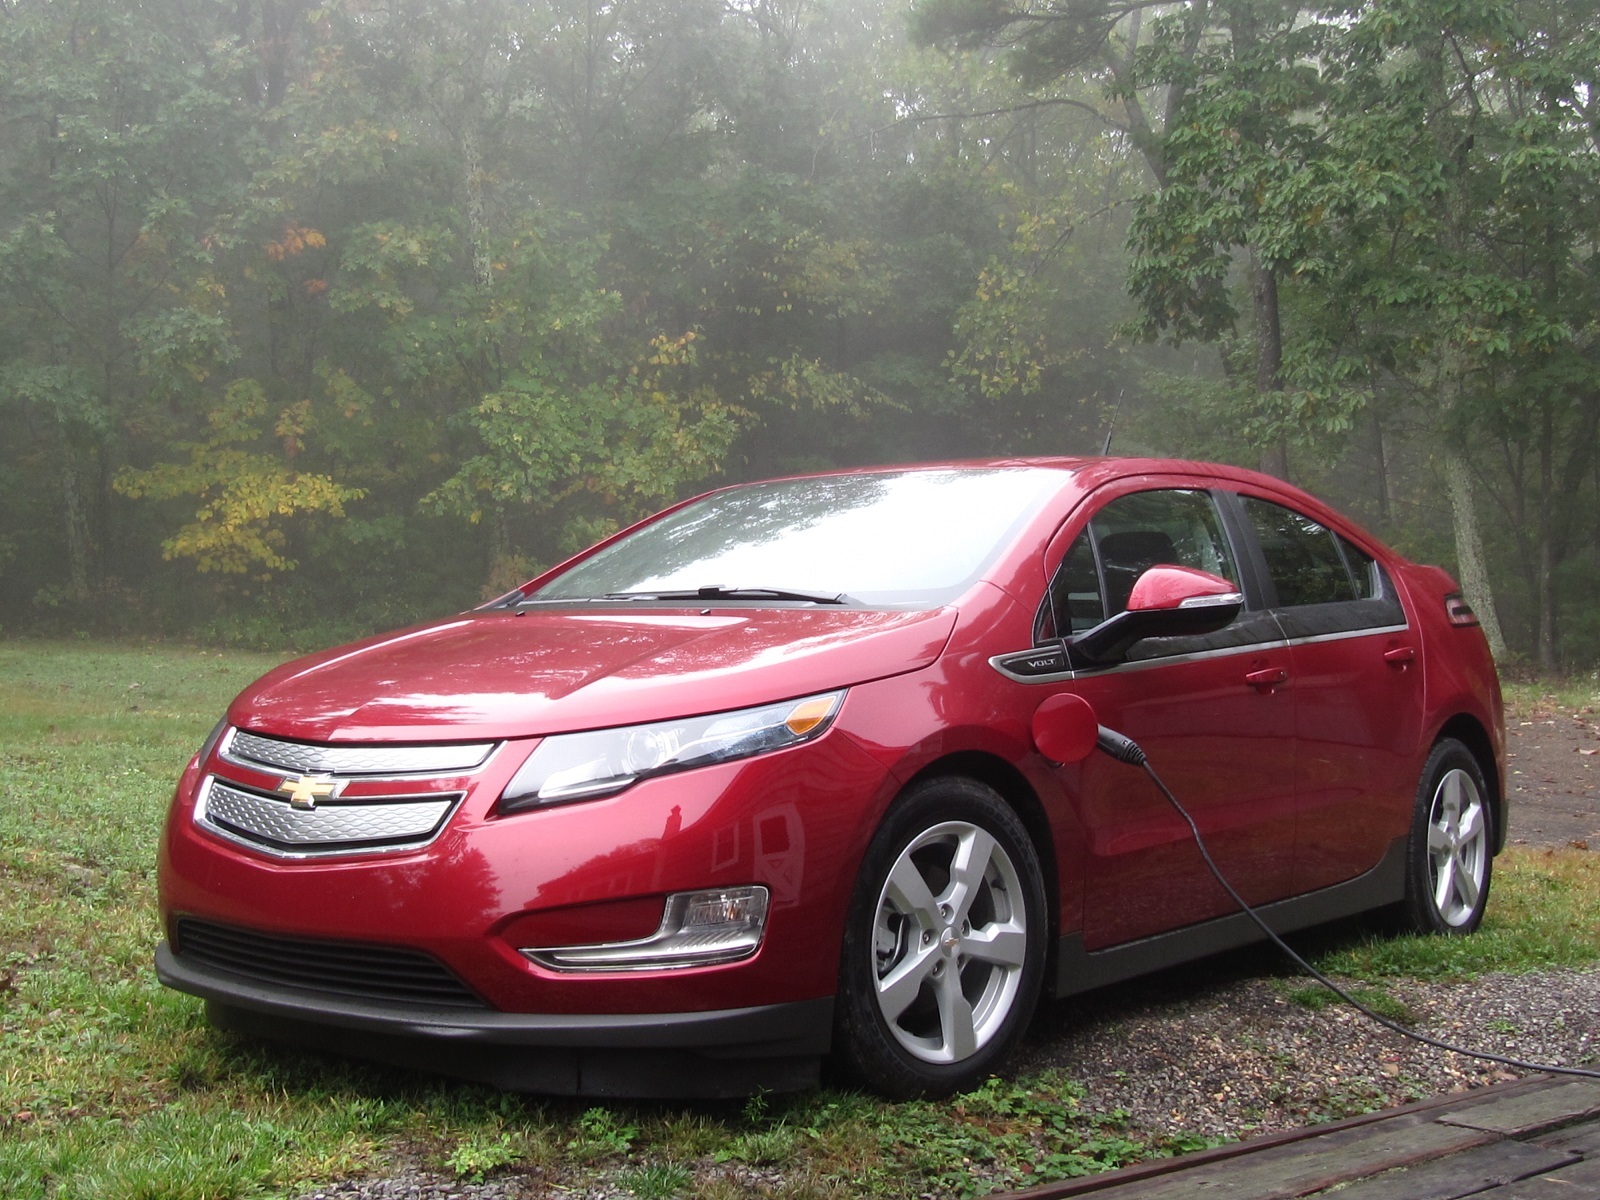 2013 Chevrolet Volt Gas Mileage Electric Range Test focus for Modern Car Mpg